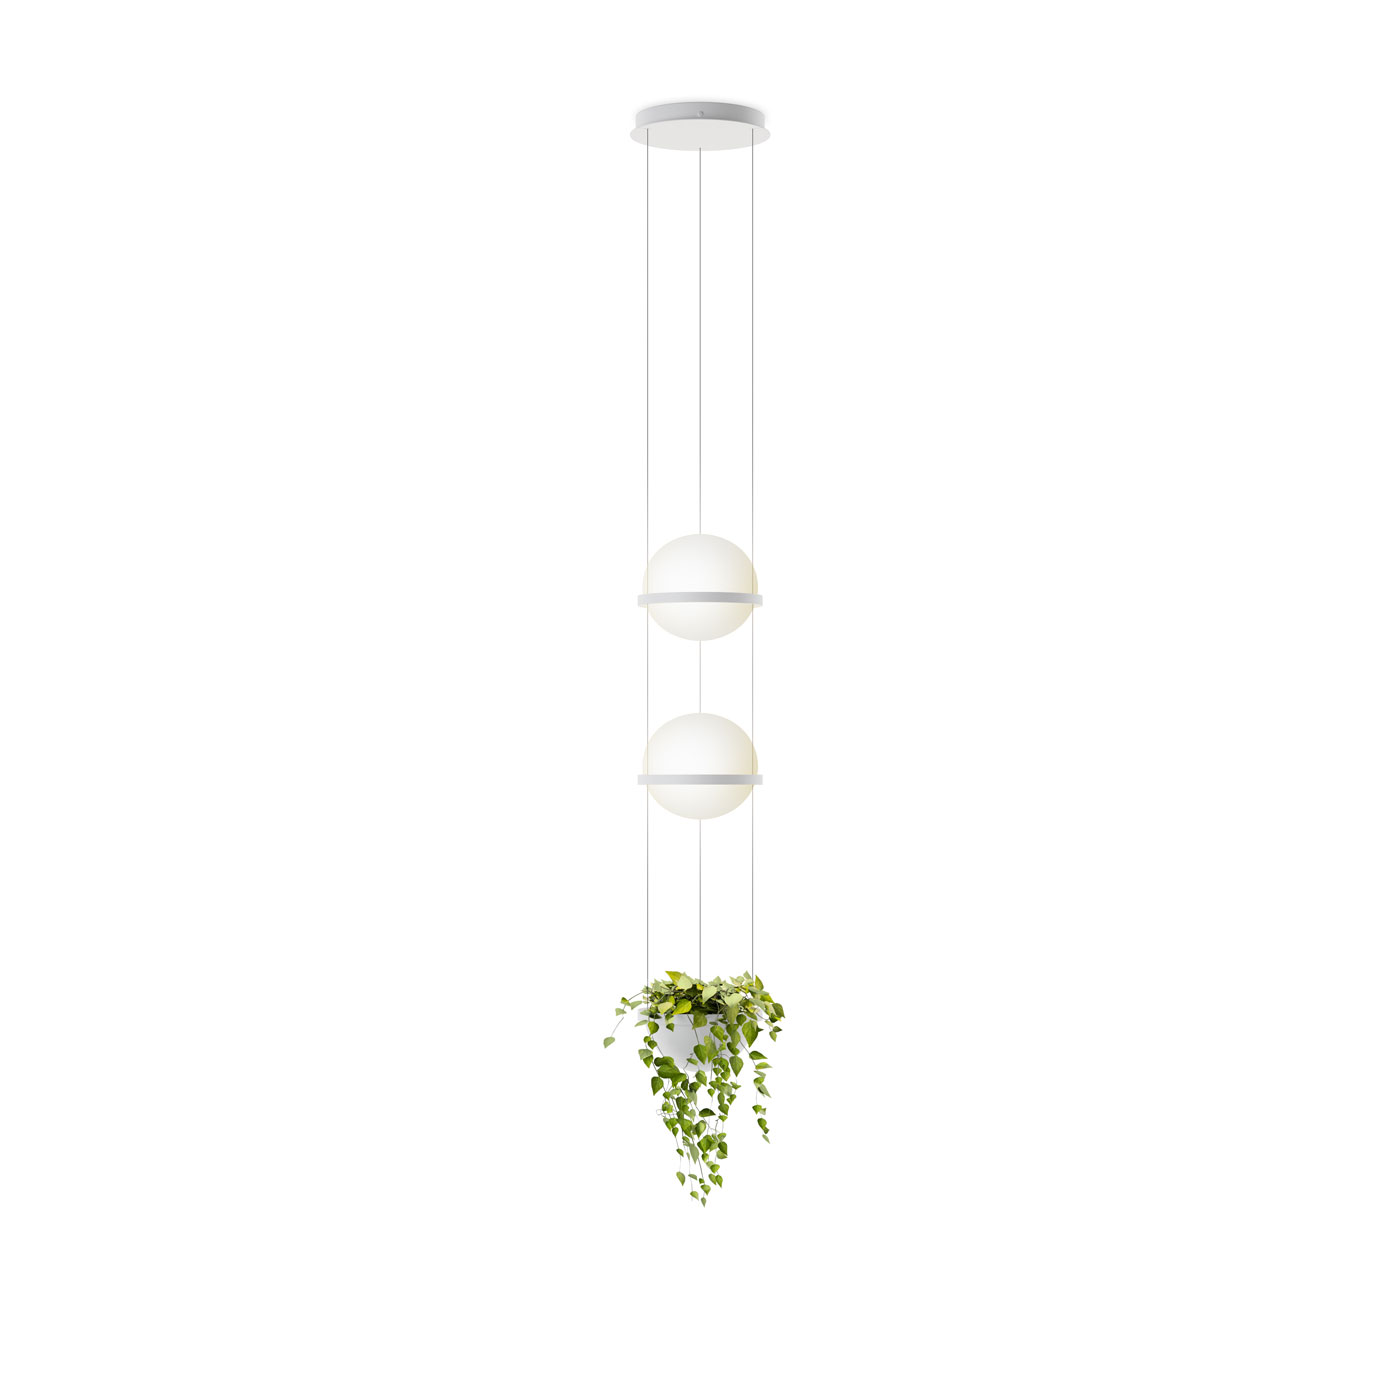 Vibia The Edit - Versatile pendant lights for future office spaces - Palma